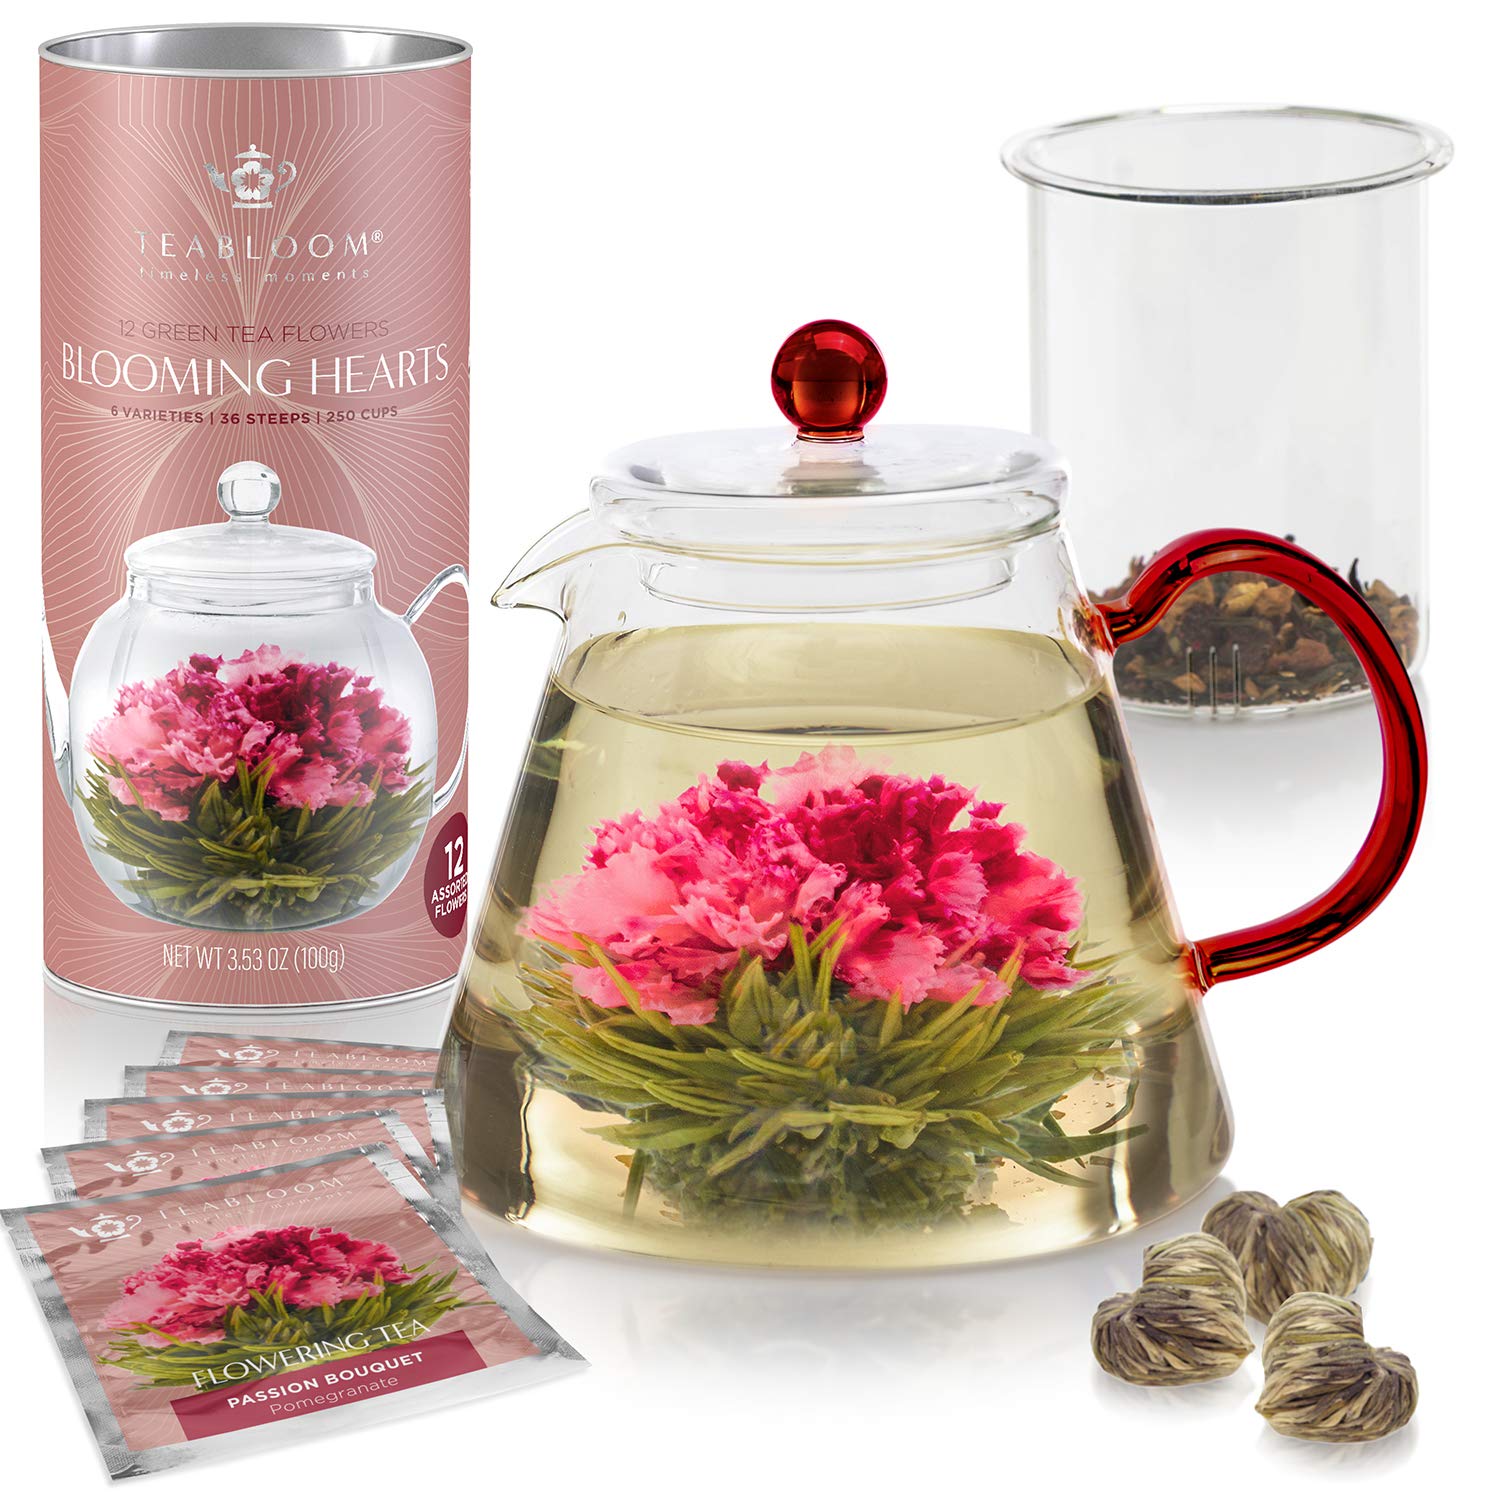 Teabloom Christmas Flowering Tea Gift Set - Stovetop Safe Glass Teapot with Removable Loose Leaf Tea Glass Infuser (34 oz) - 12 Heart-Shaped Bloomi...